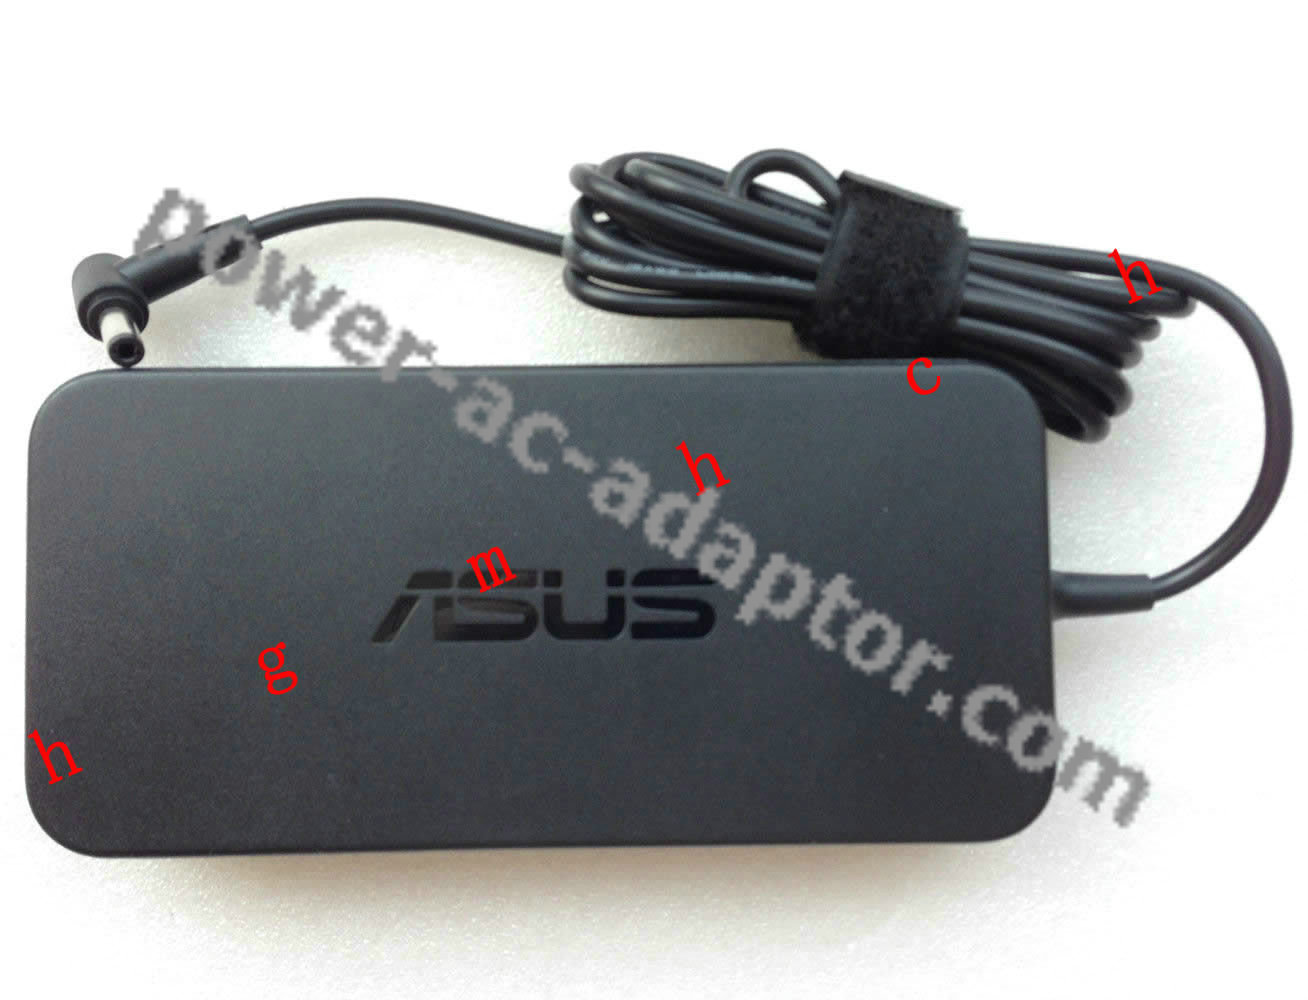 Genuine OEM Asus 120W Slim AC Adapter for G60Vx P8700 Gaming